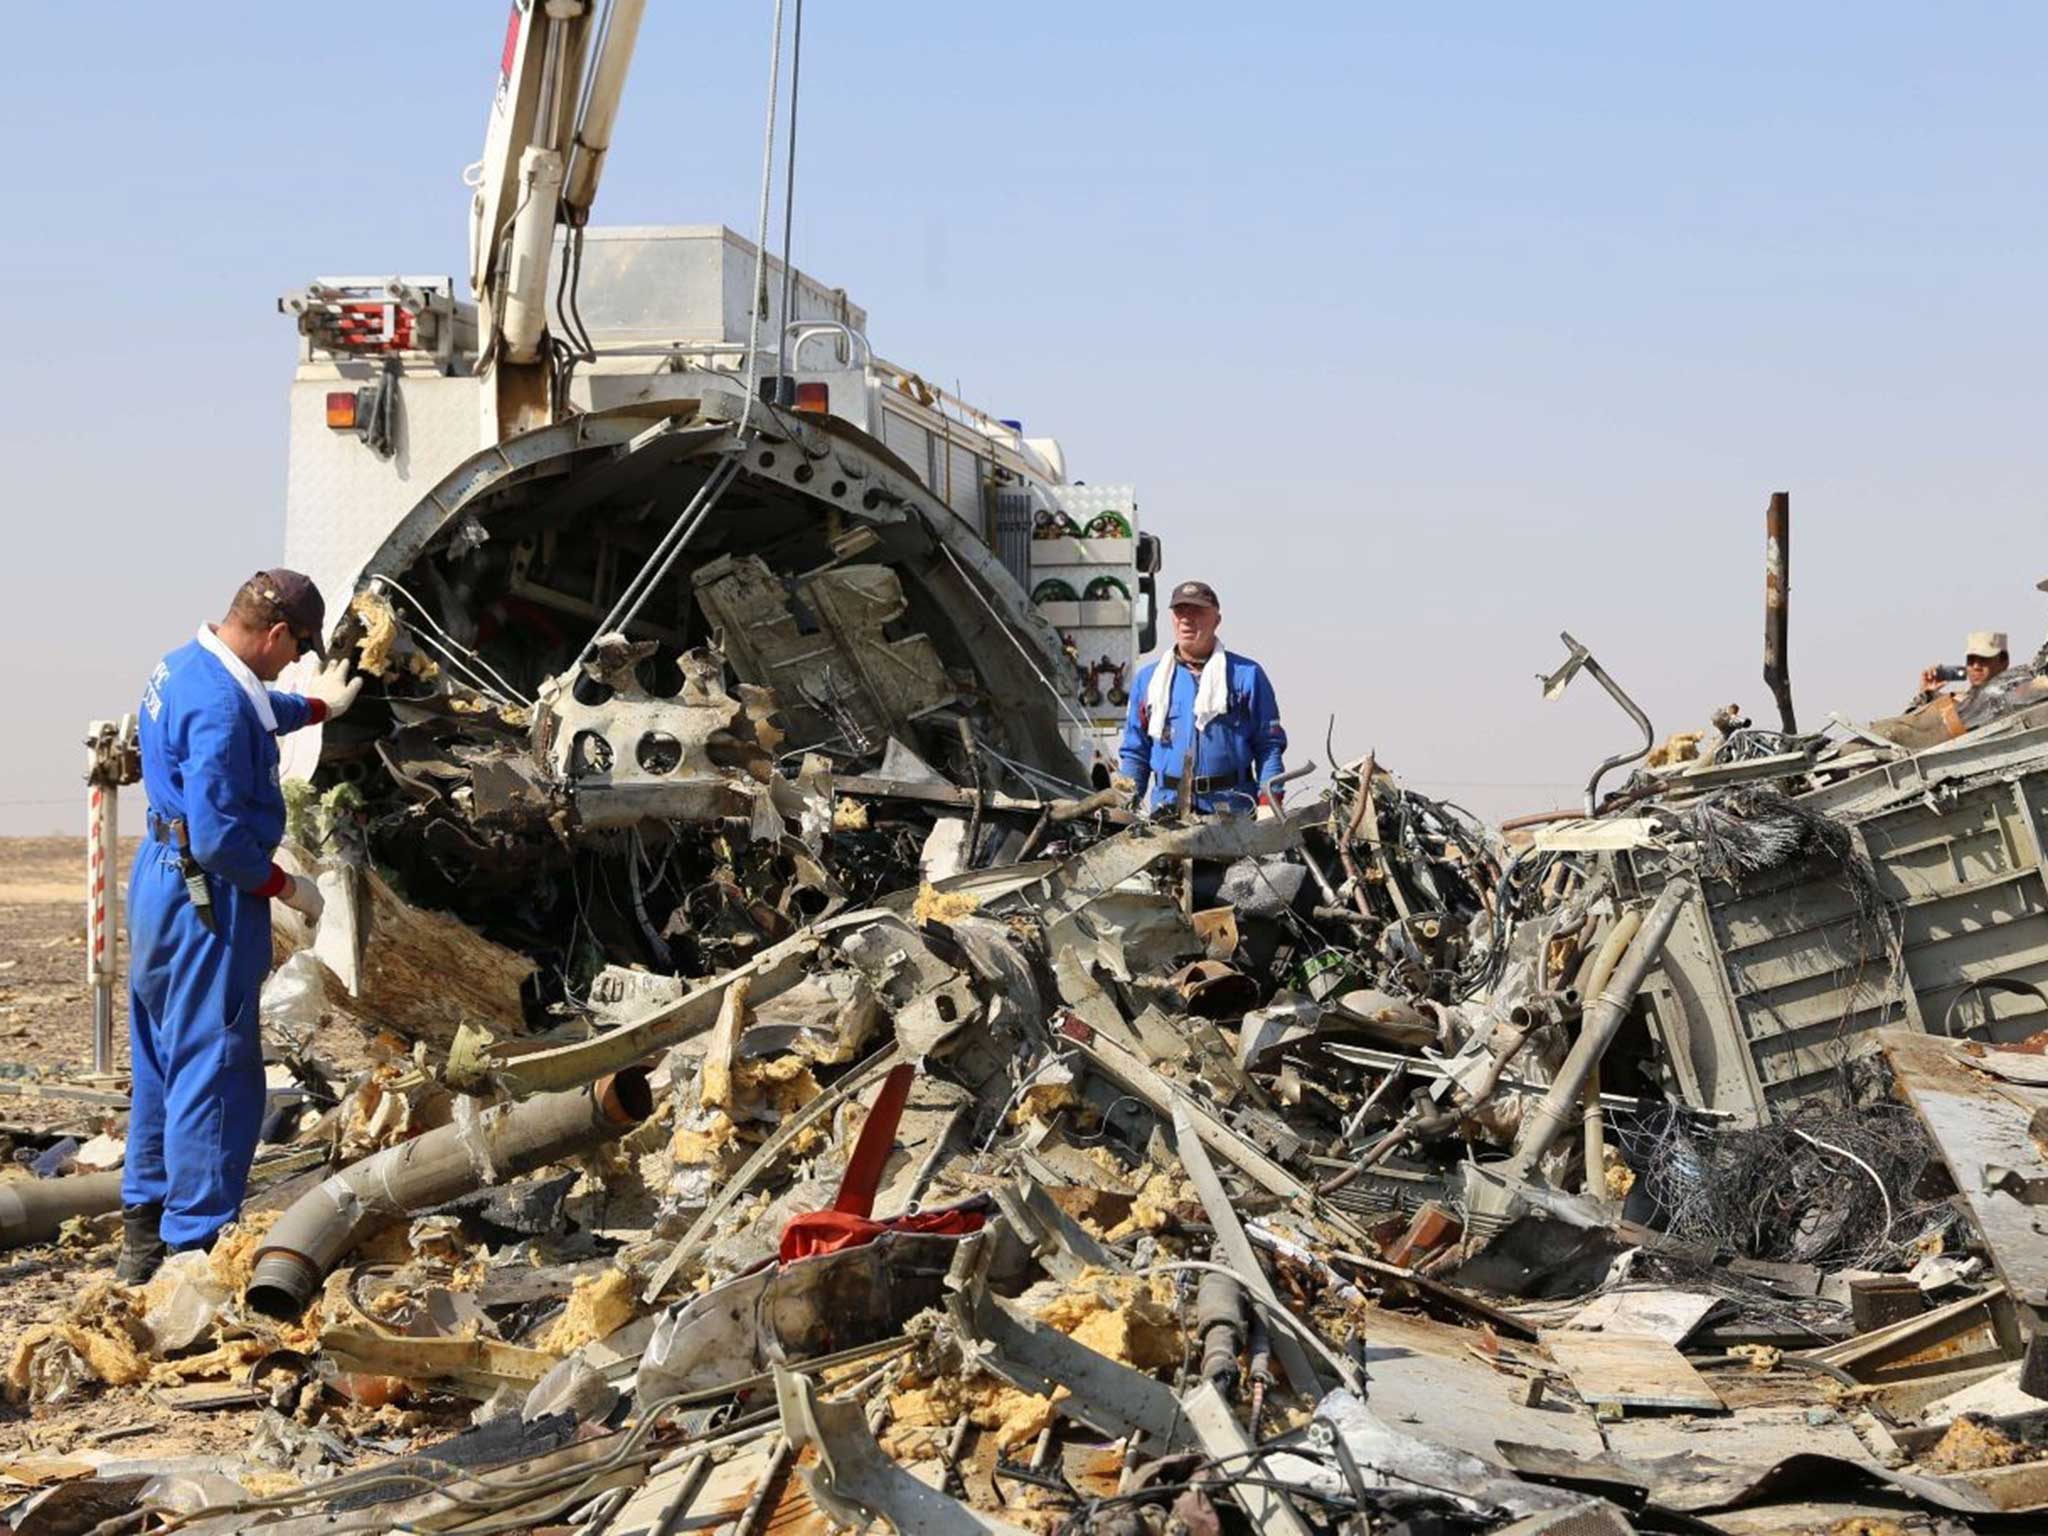 Russian investigators comb through the wreckage in the Sinai Peninsula